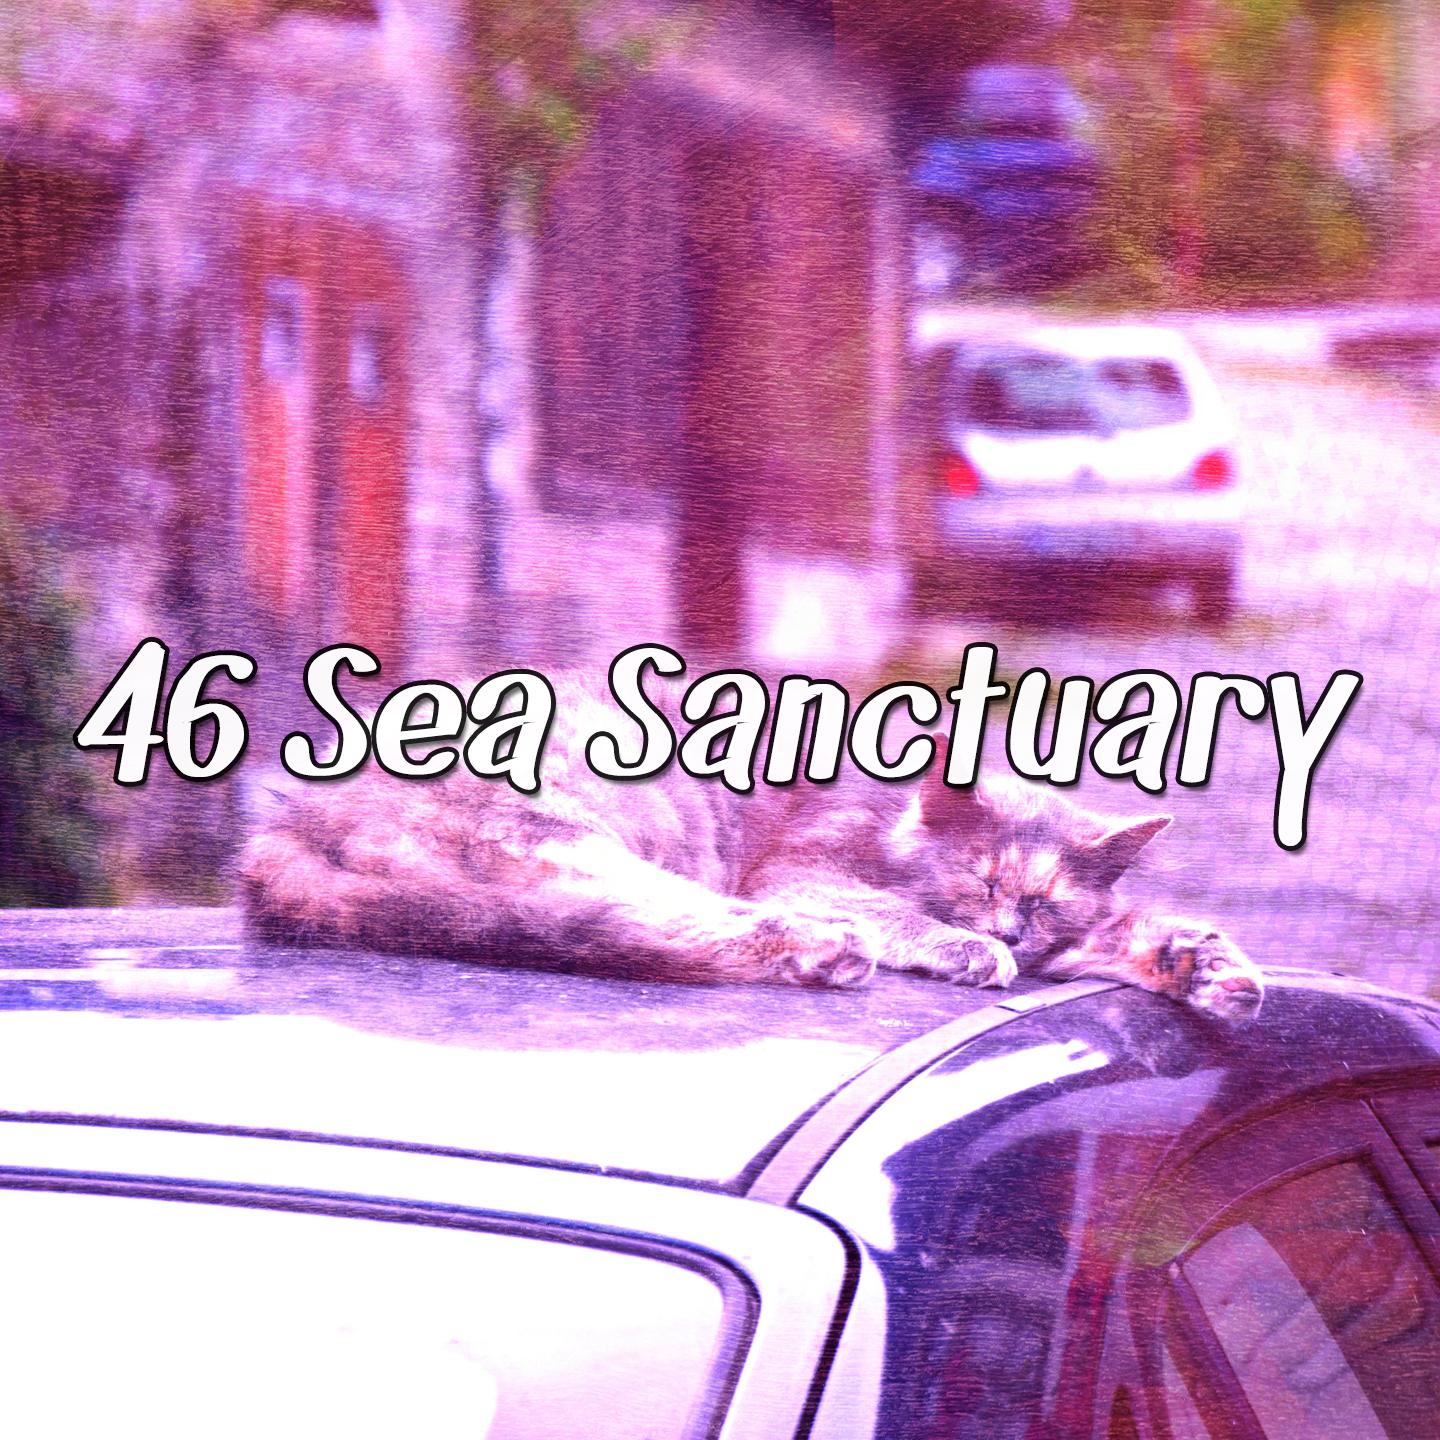 46 Sea Sanctuary